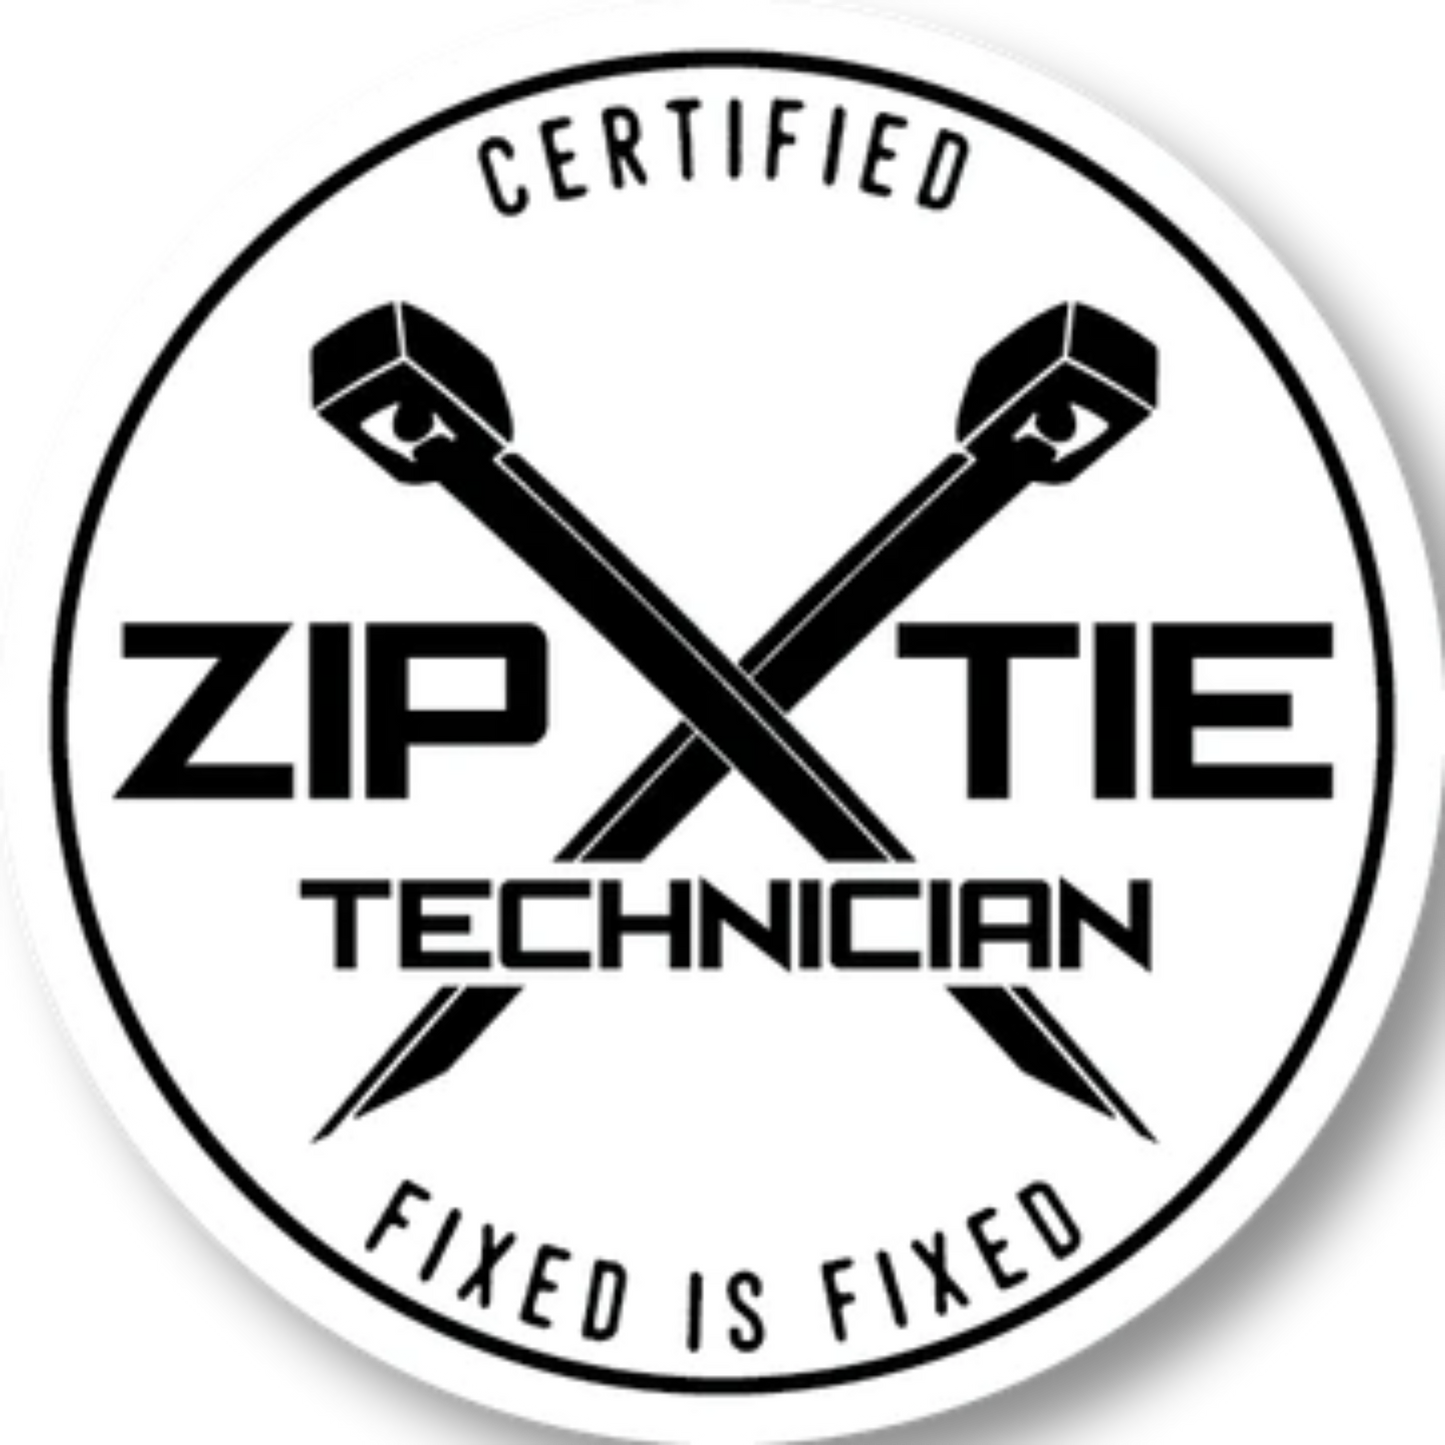 Certified Zip Tie Technician Funny Toolbox Sticker 3.5" x 3.5"